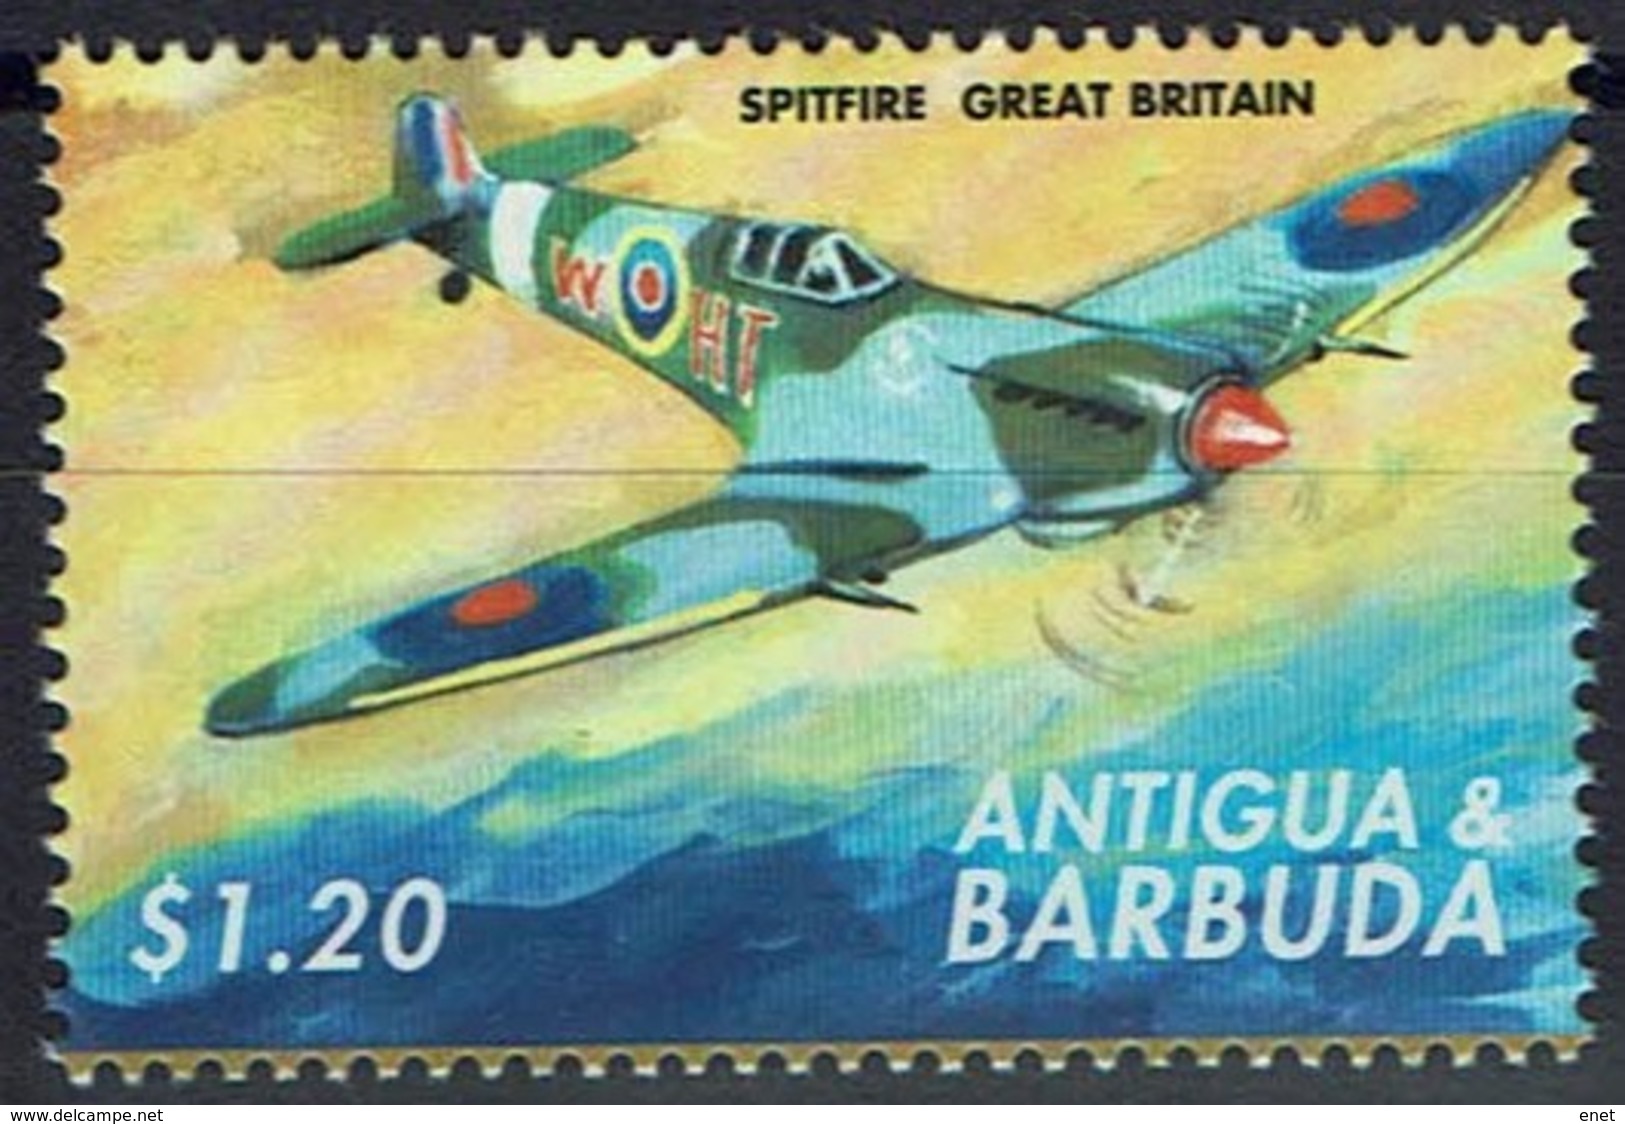 Antigua Und Barbuda 2000 - MiNr 3331 - Flugzeug Spitfire - Flugzeuge